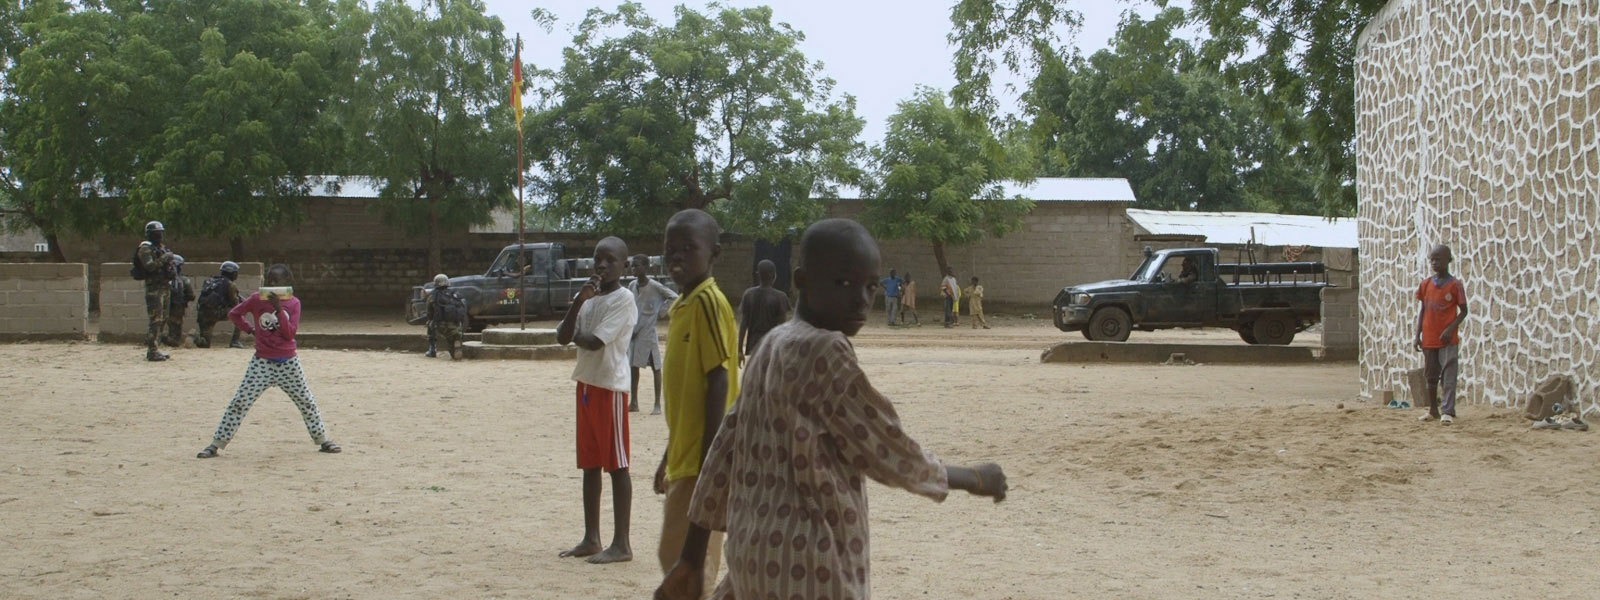 Image from 'Le Spectre de Boko Haram'